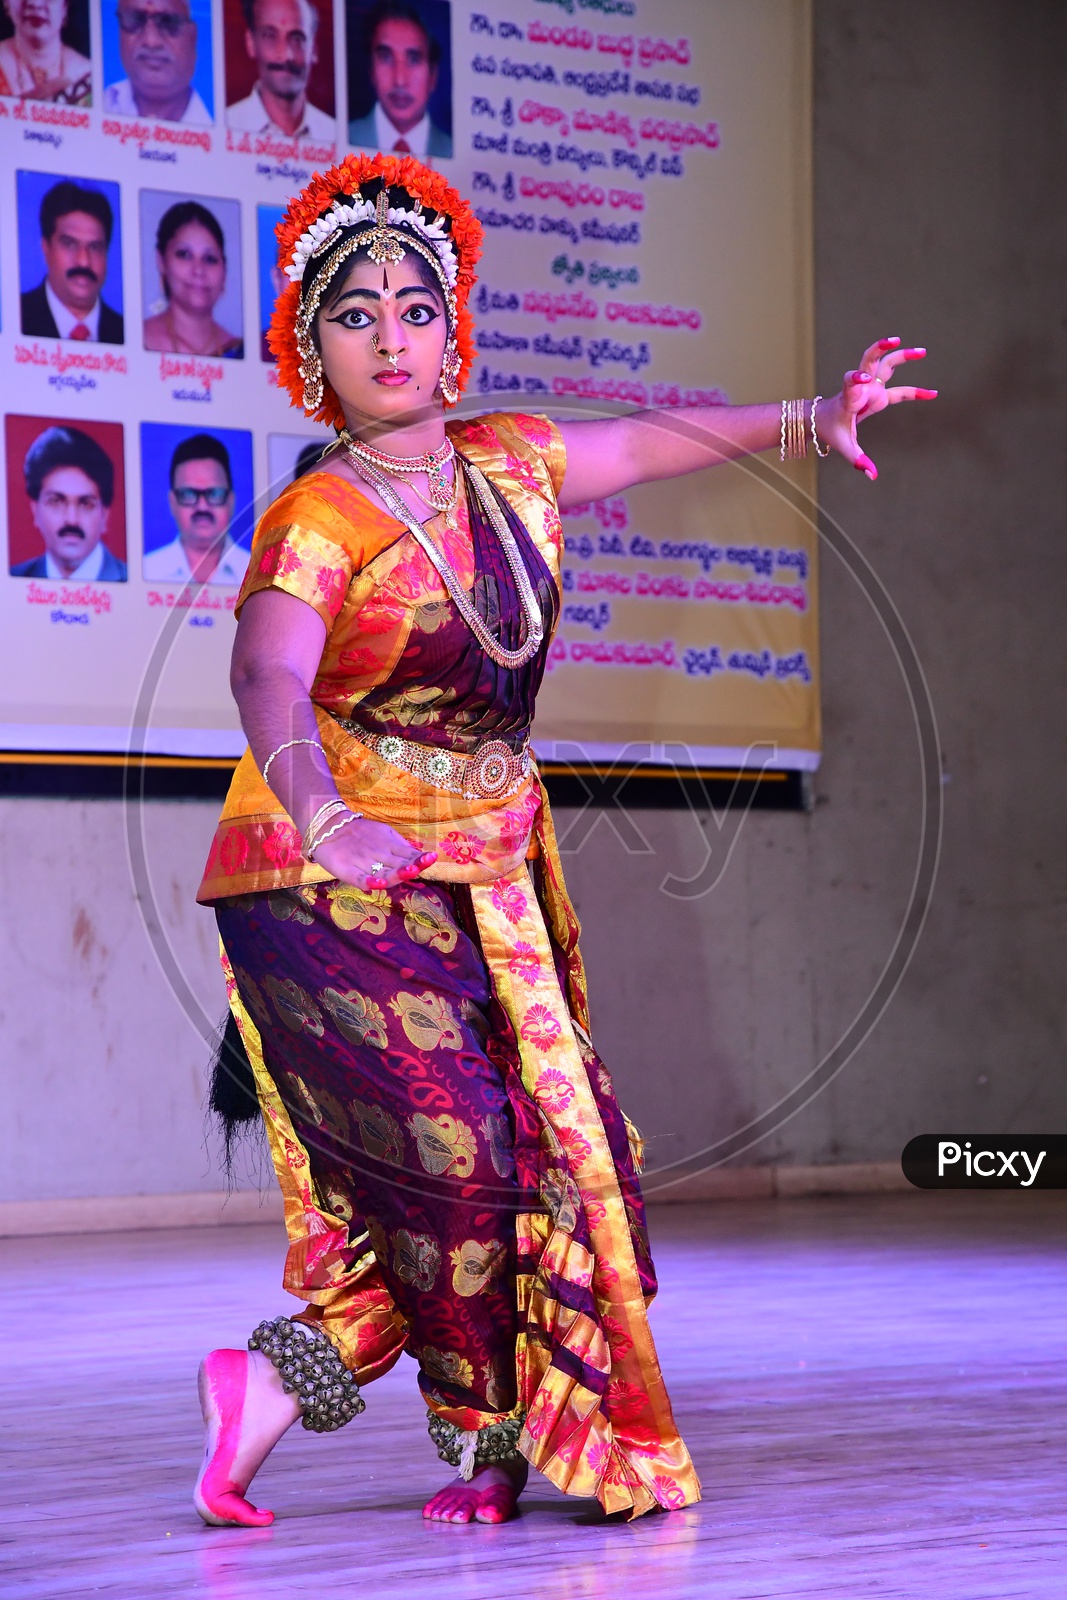 Pin by Rupali lad on Bharatanatyam dancer | Bharatanatyam poses,  Bharatanatyam dancer, Dance poses